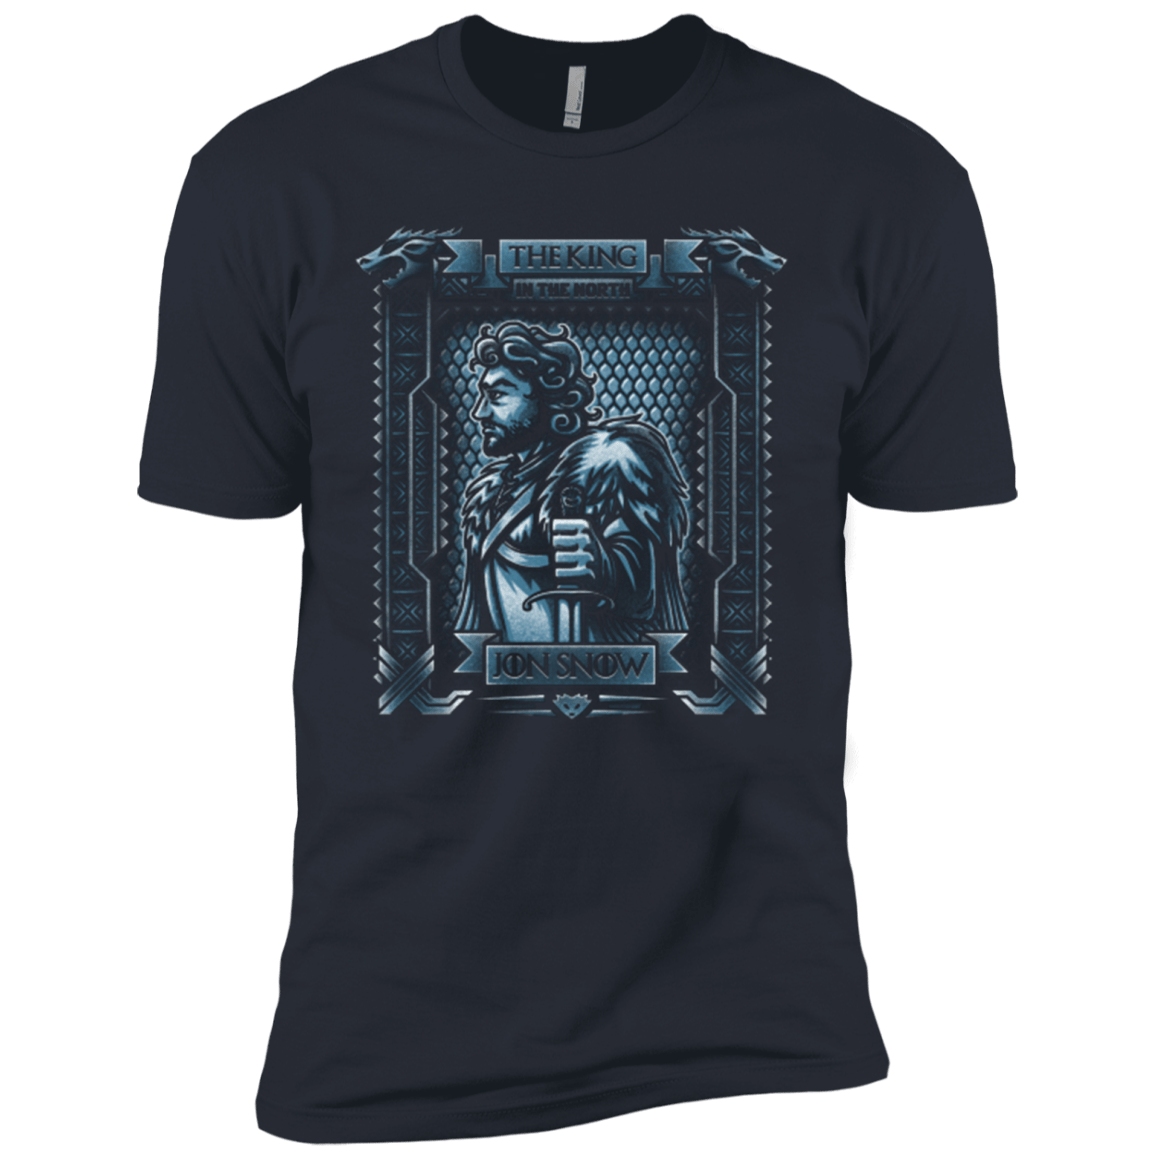 Jon Snow King in the North Men's Premium T-Shirt